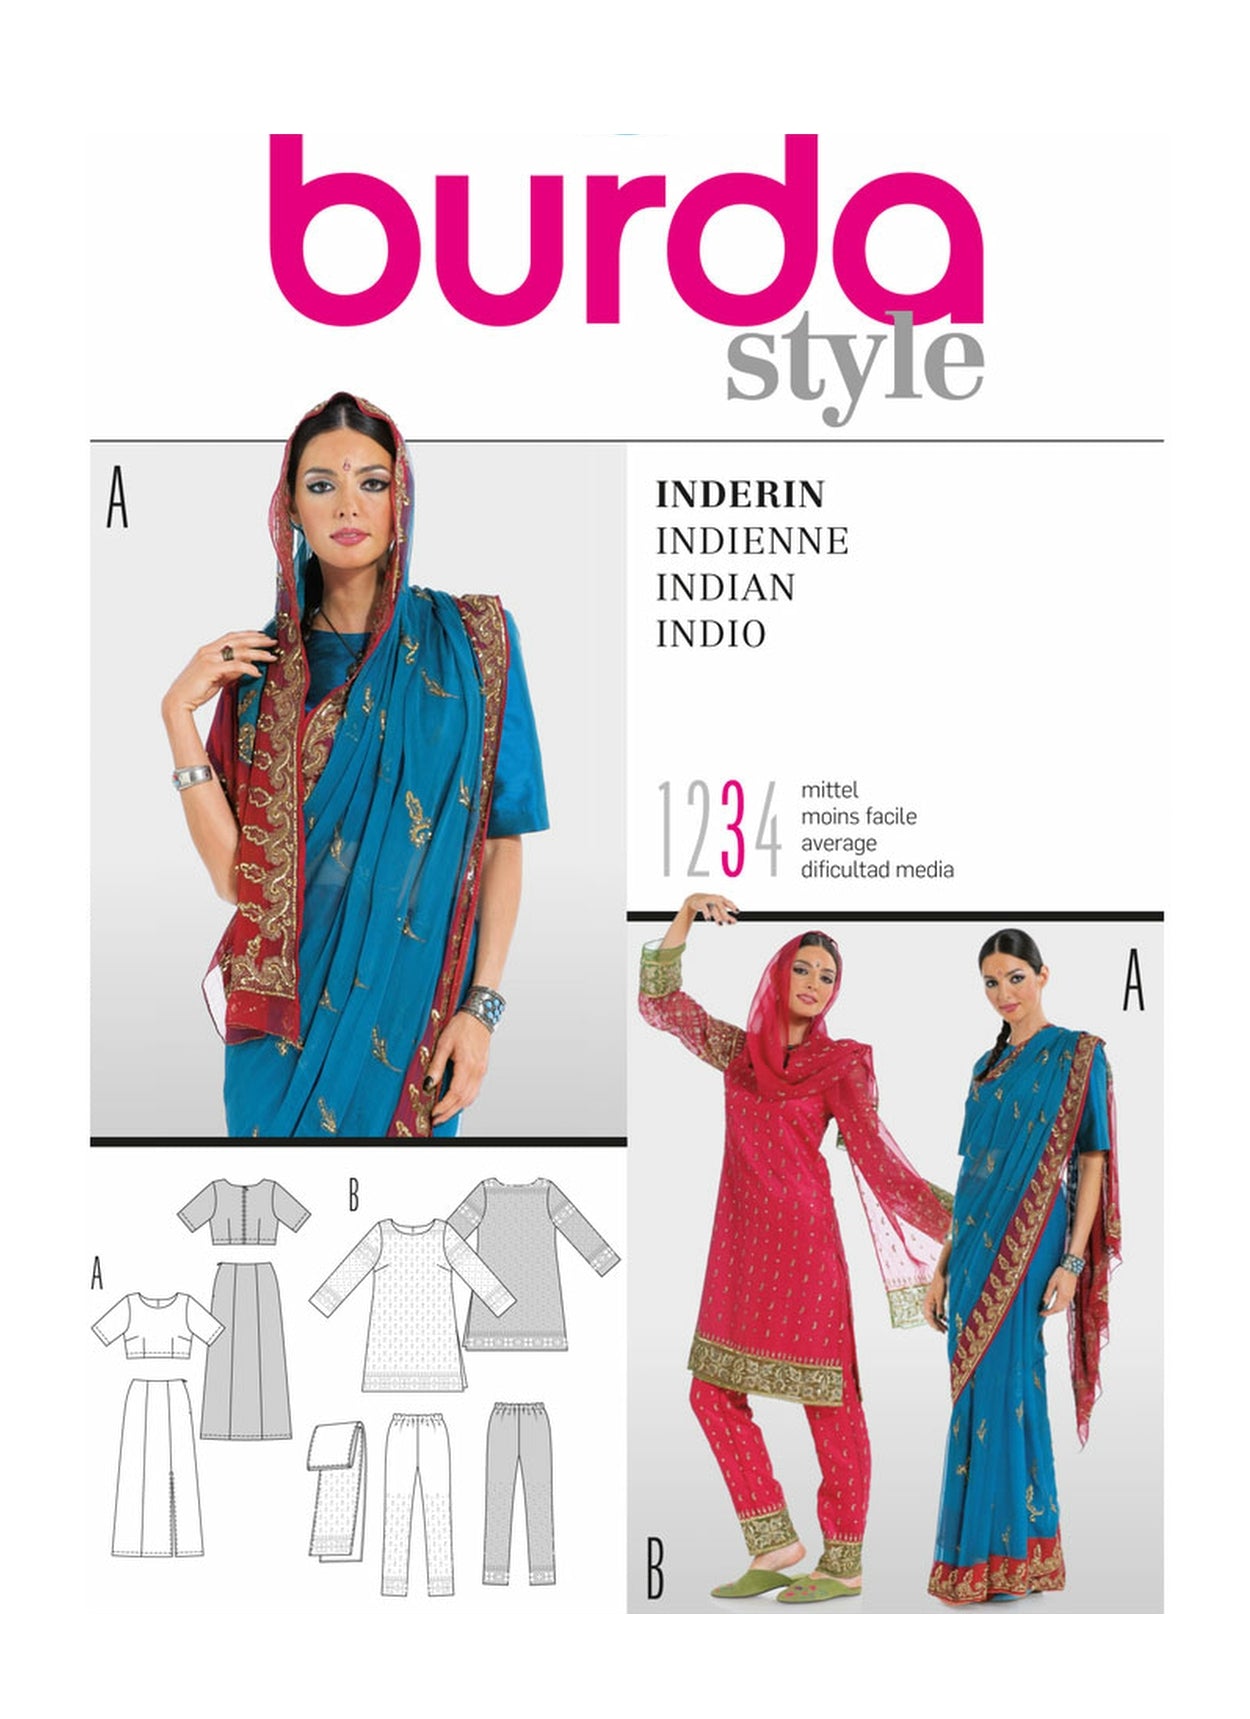 Burda 7701 Sari Pattern from Jaycotts Sewing Supplies